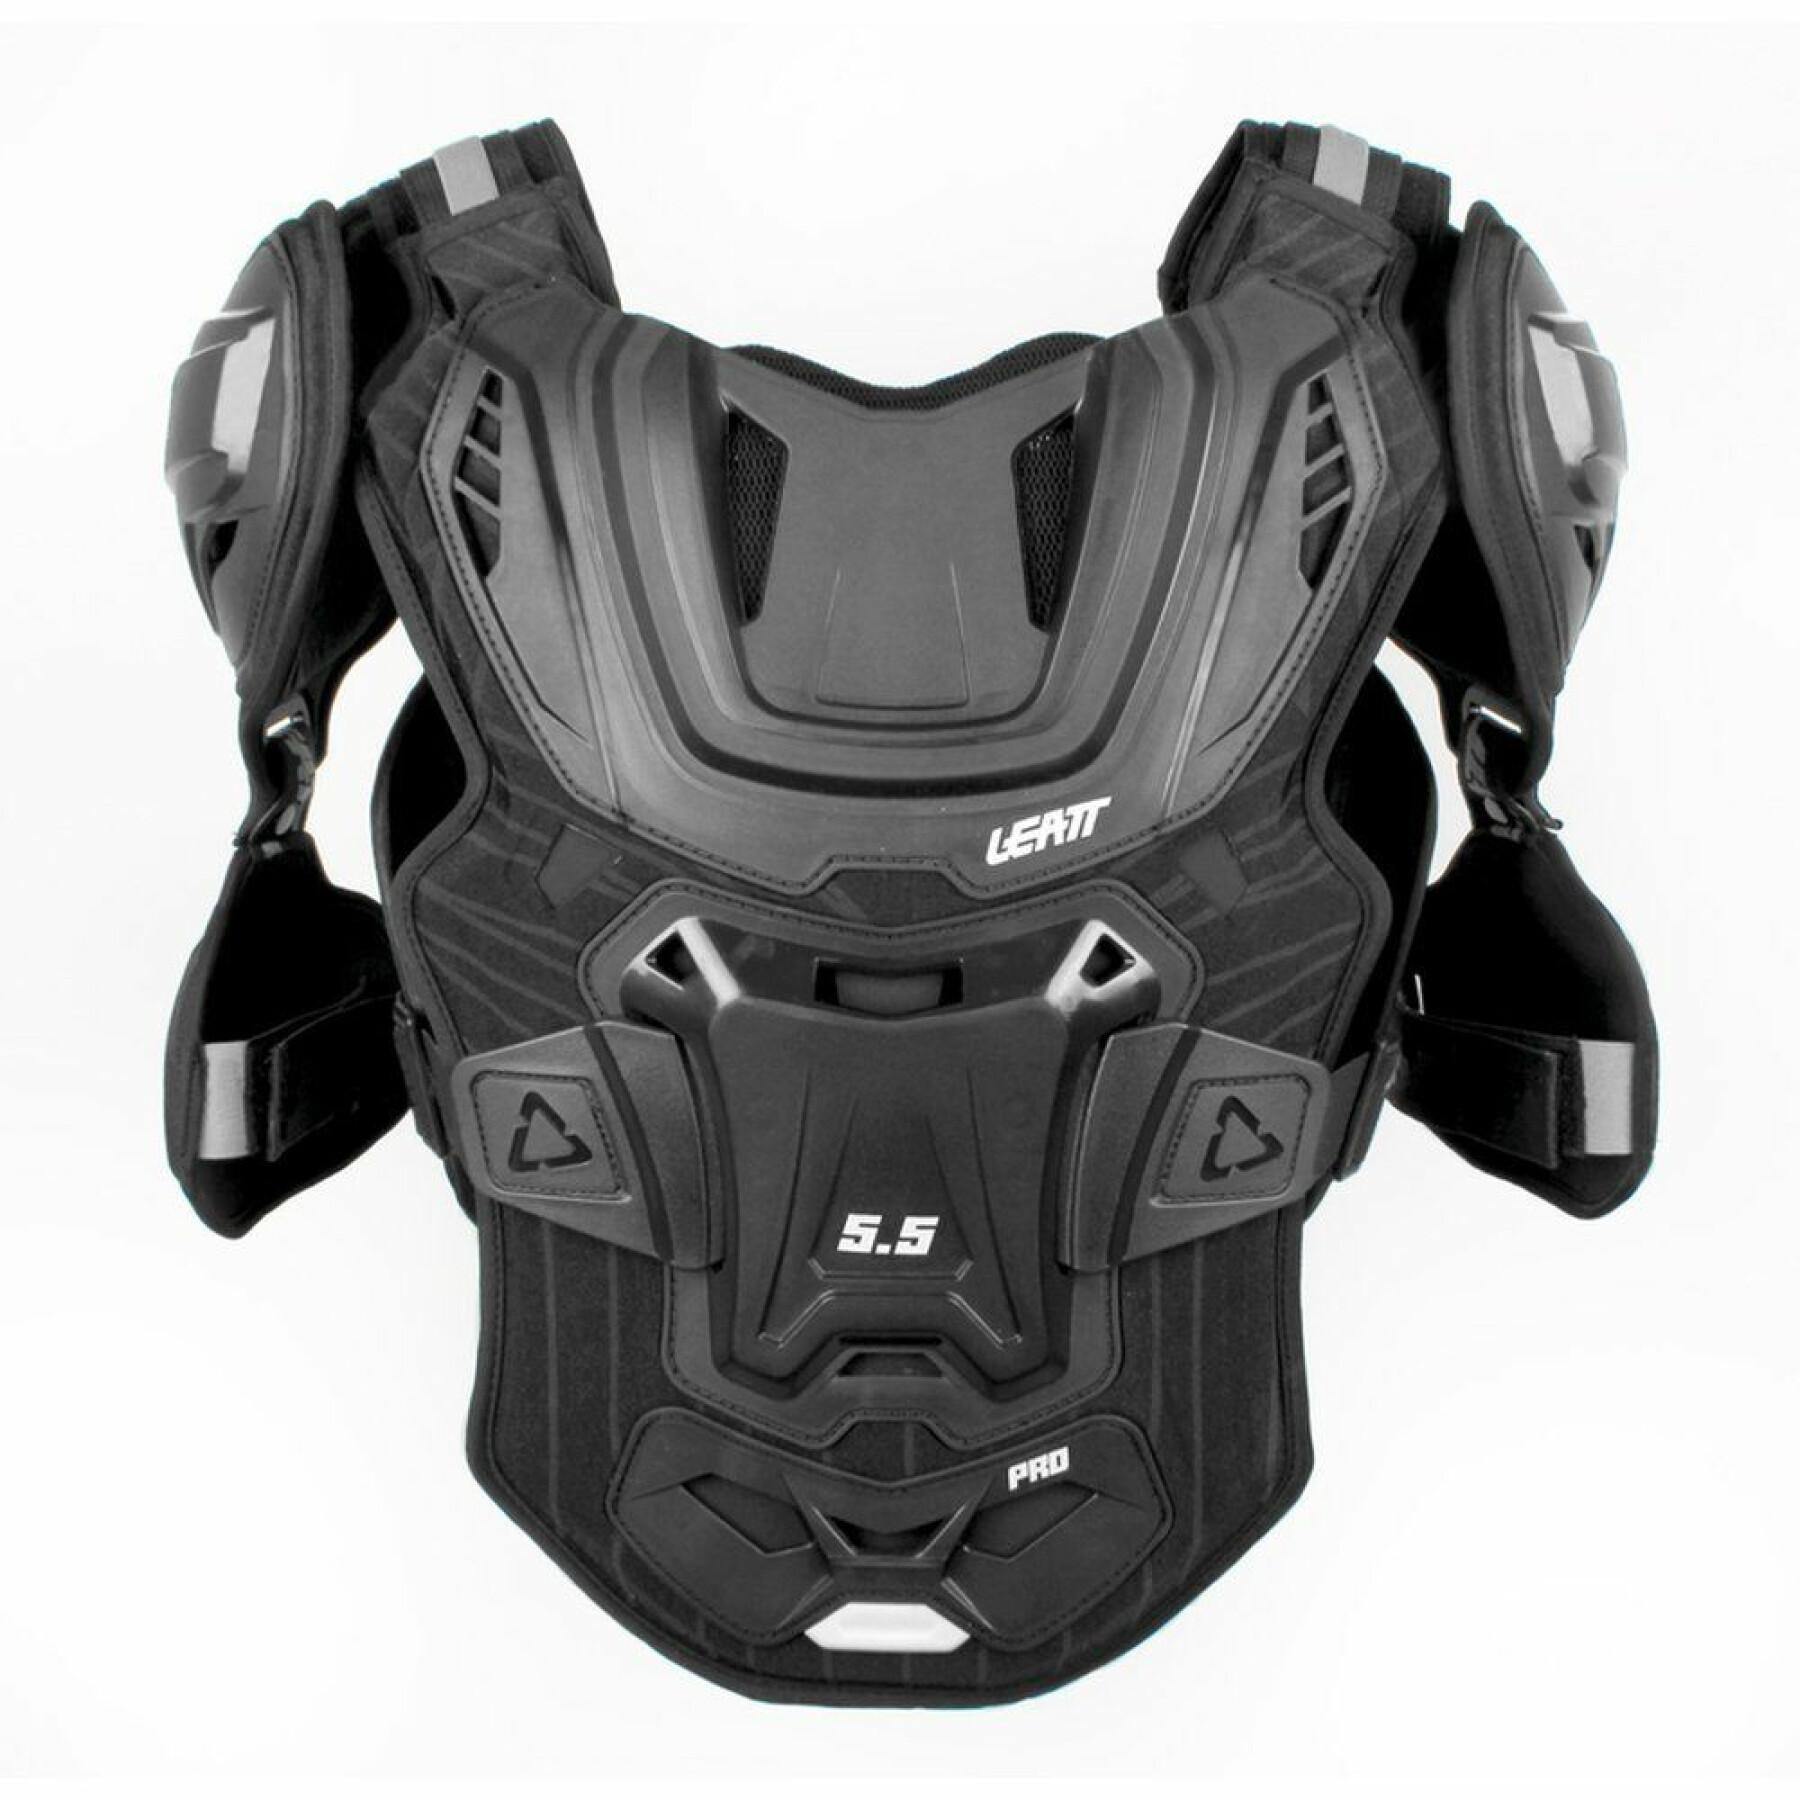 Motorrad-Brustschutz Leatt 5.5 Pro